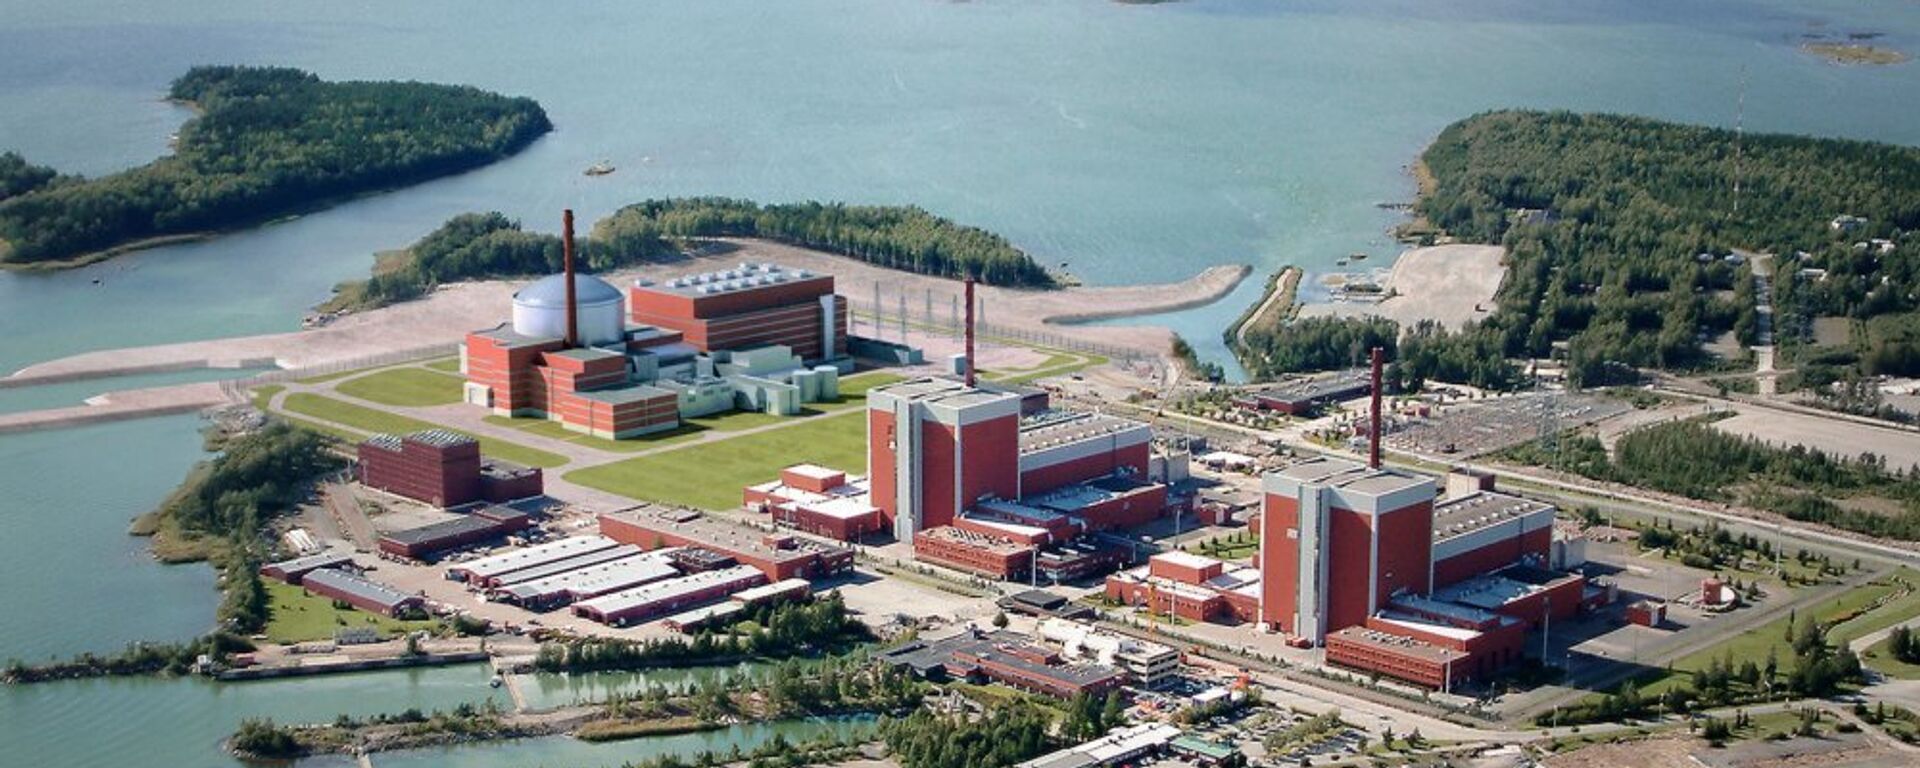 Olkiluoto Nuclear Power Plant in Eurajoki, Finland - Sputnik International, 1920, 23.11.2022